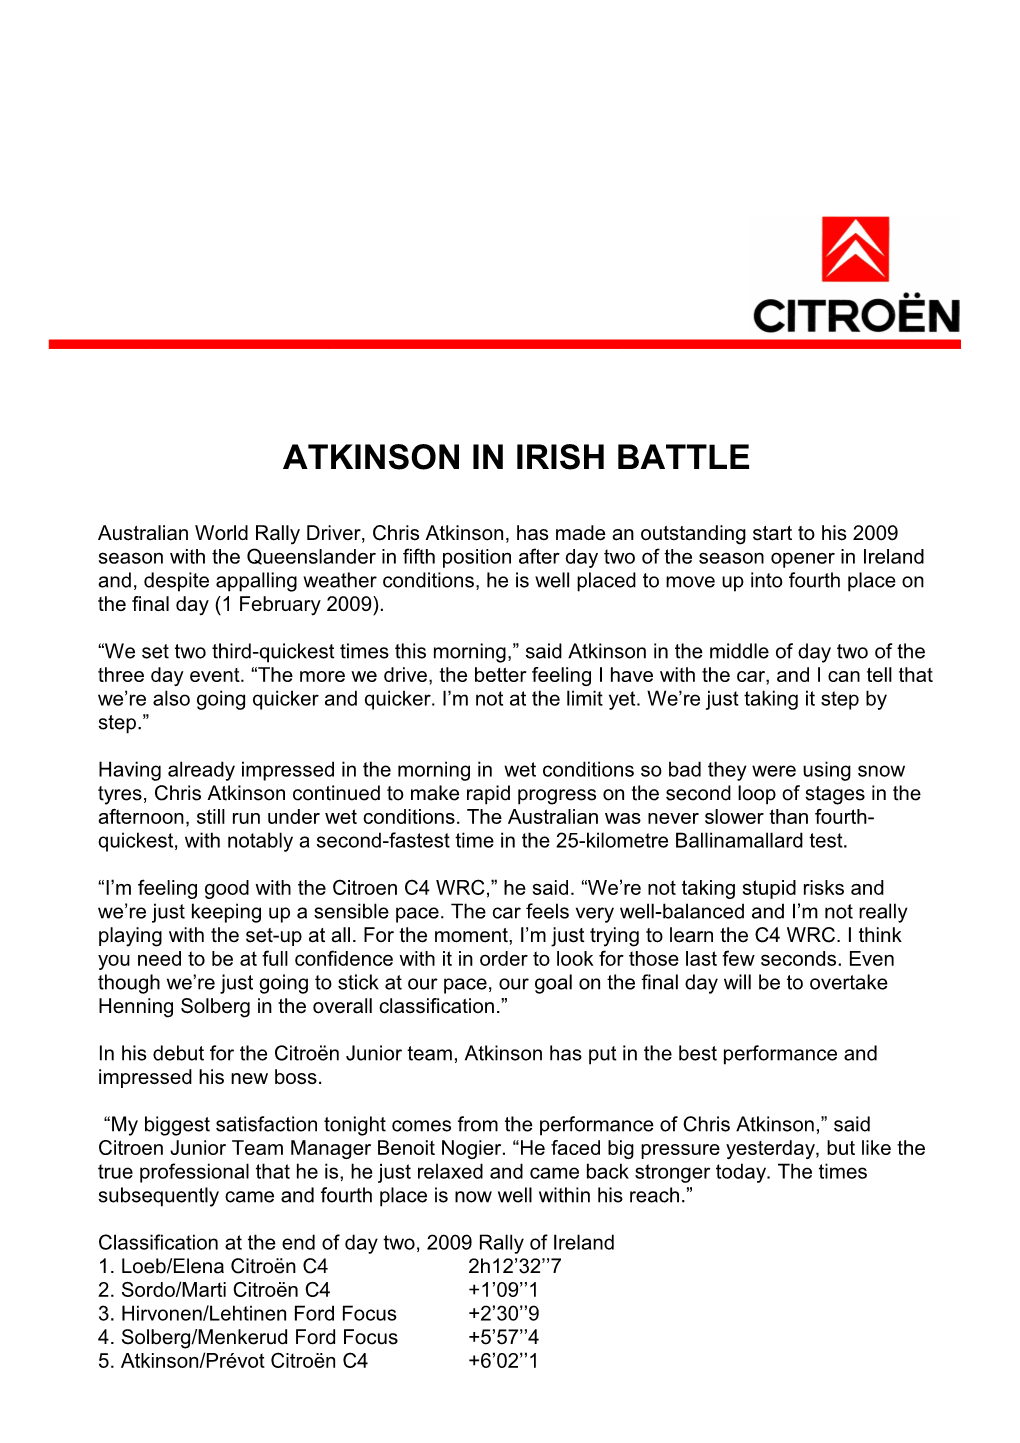 Atkinson in Irish Battle